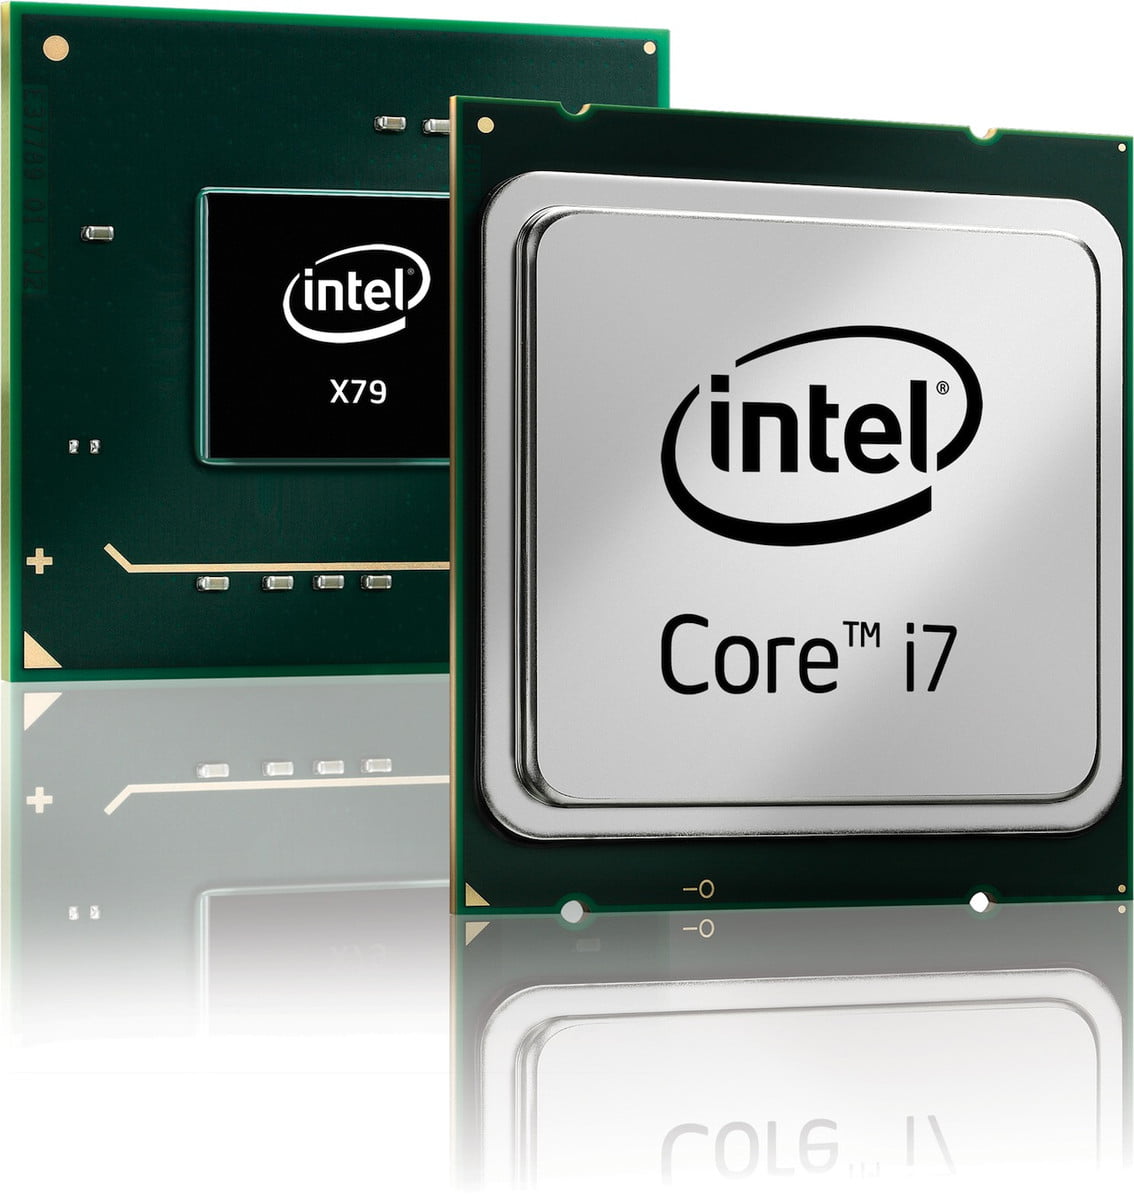  Intel Core I7-2960XM | Laptop News